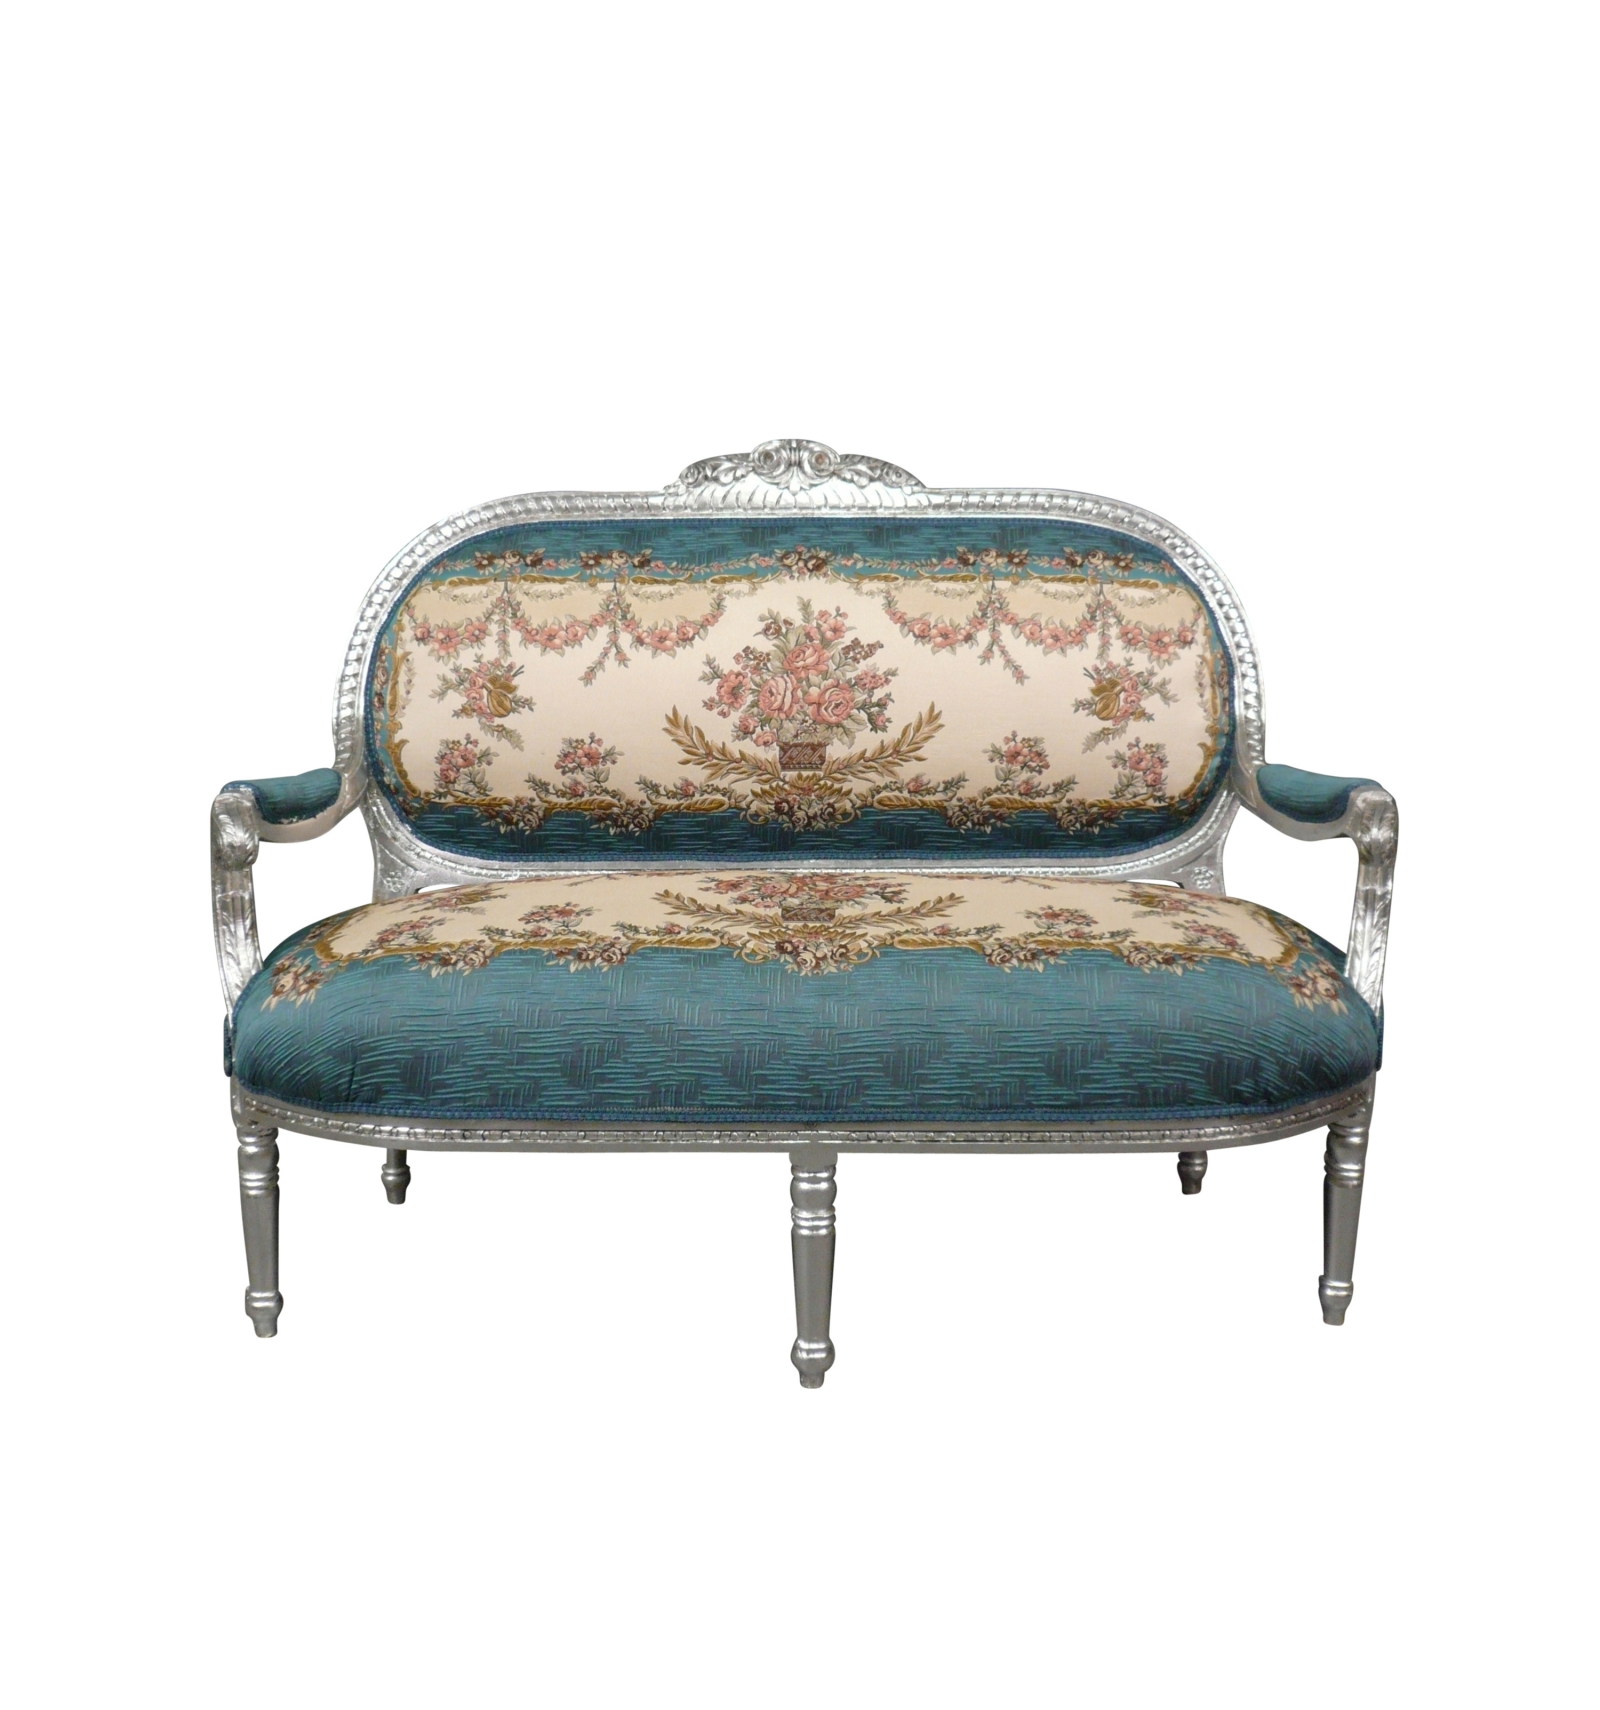 Louis XVI Royal Blue Sofa - Cheap Louis XVI Furniture